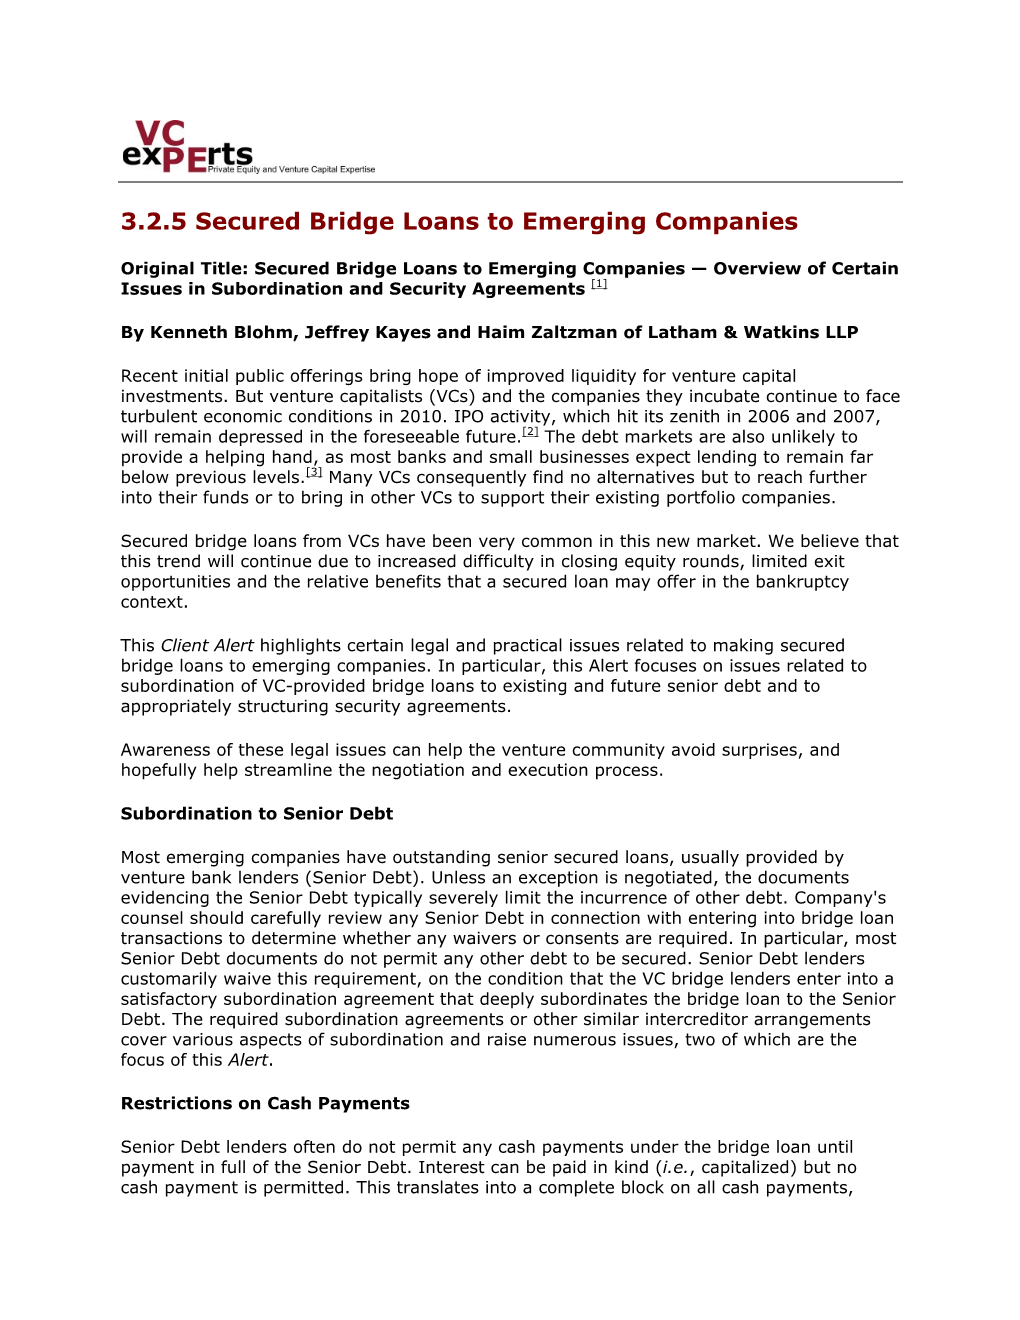 Secured Bridge Loans to Emerging Companies